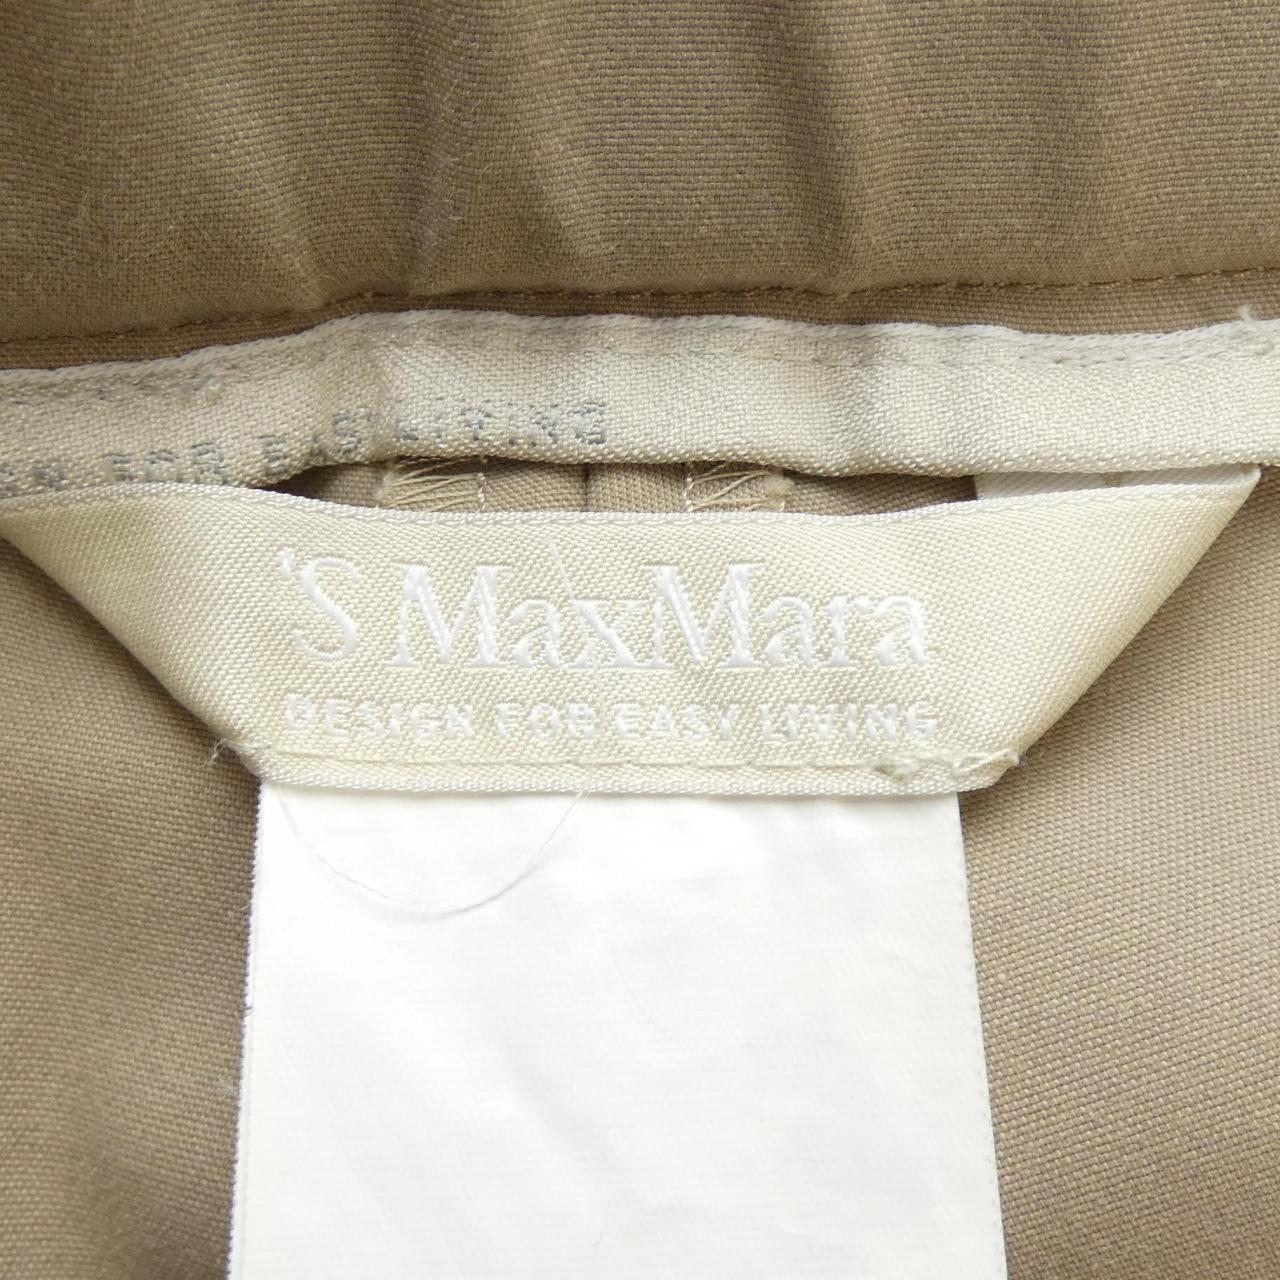 S Max Mara的马克斯玛拉裤子